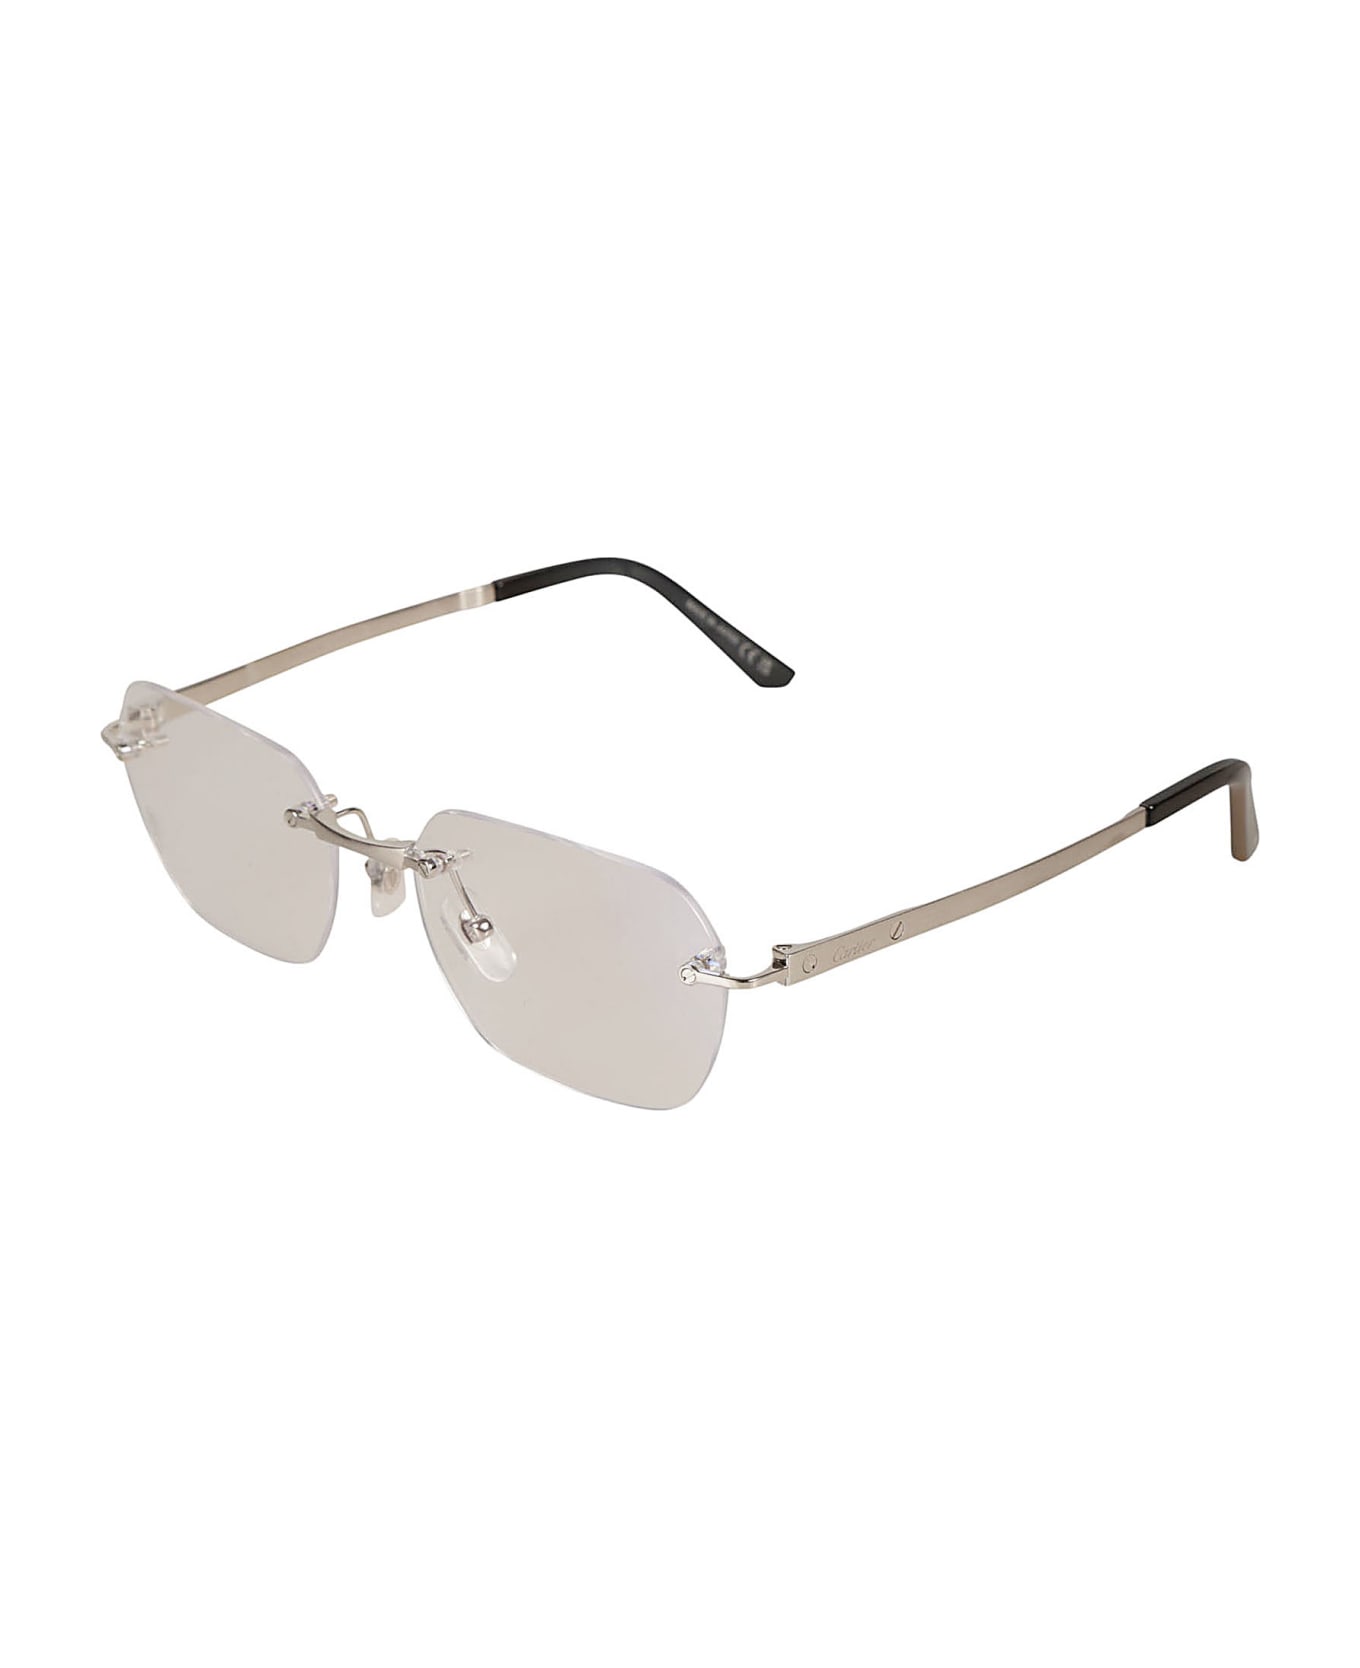 Cartier Eyewear Clear Classic Frameless Sunglasses Sunglasses - Silver サングラス